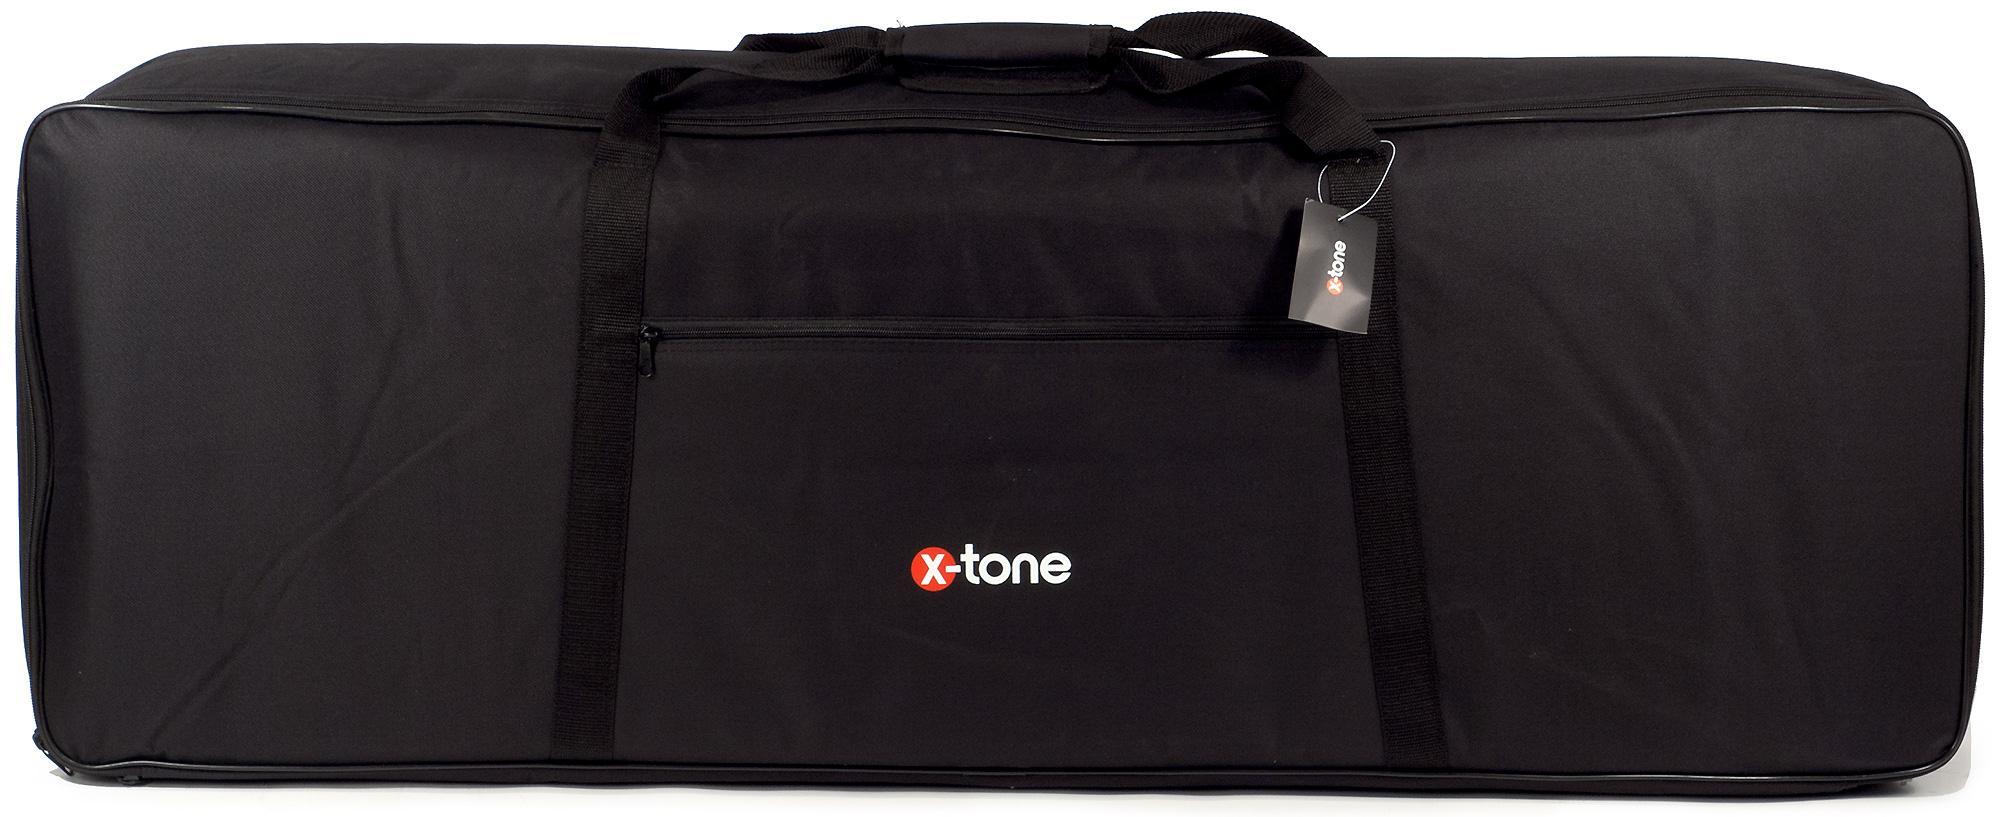 Tasche für keyboard X-tone 2100 Softbag Keyboard 61 - 10mm